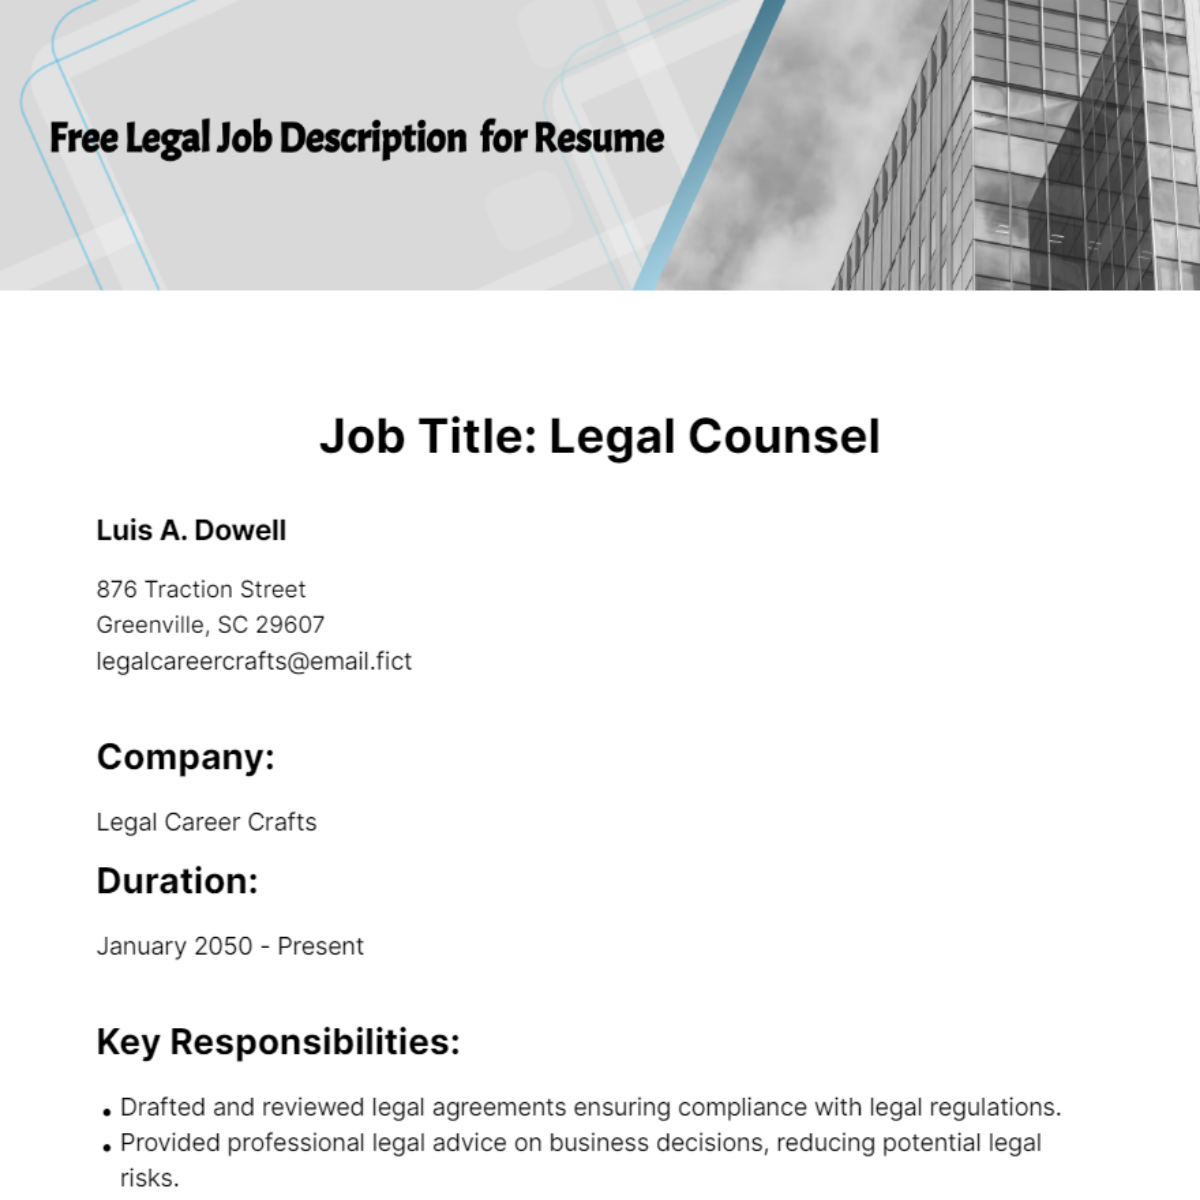 Legal Job Description for Resume Template